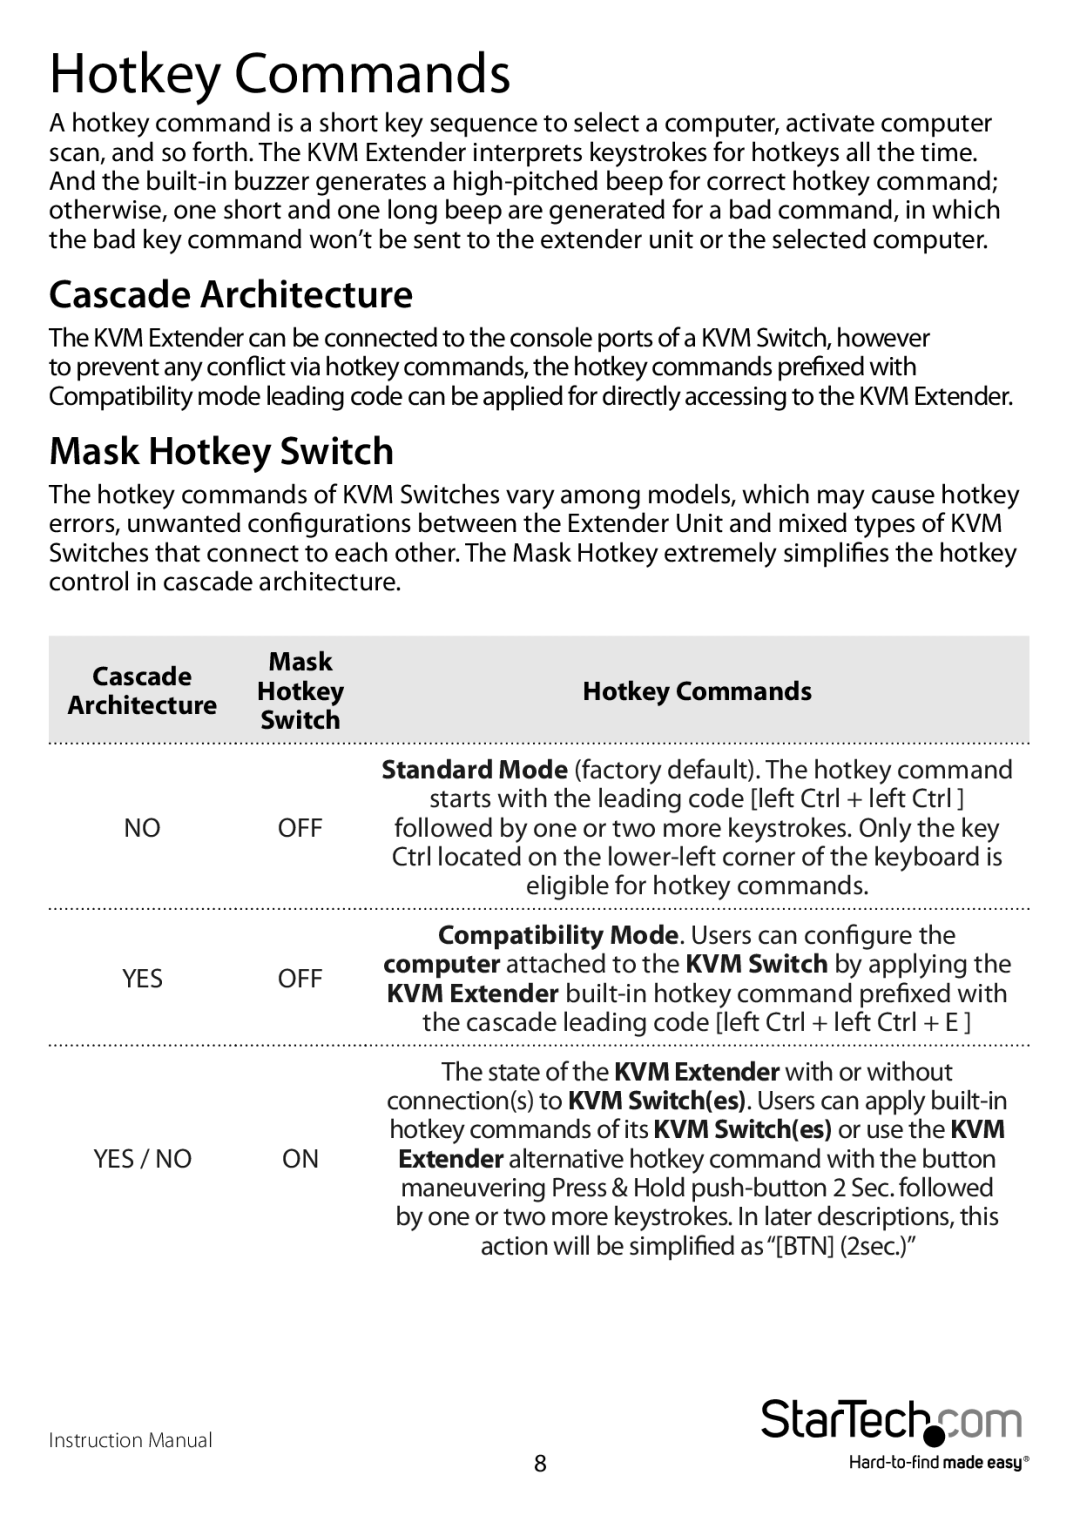 StarTech.com usb dual vga cat5 kvm console extender - 650ft/200m Hotkey Commands, Cascade Architecture, Mask Hotkey Switch 